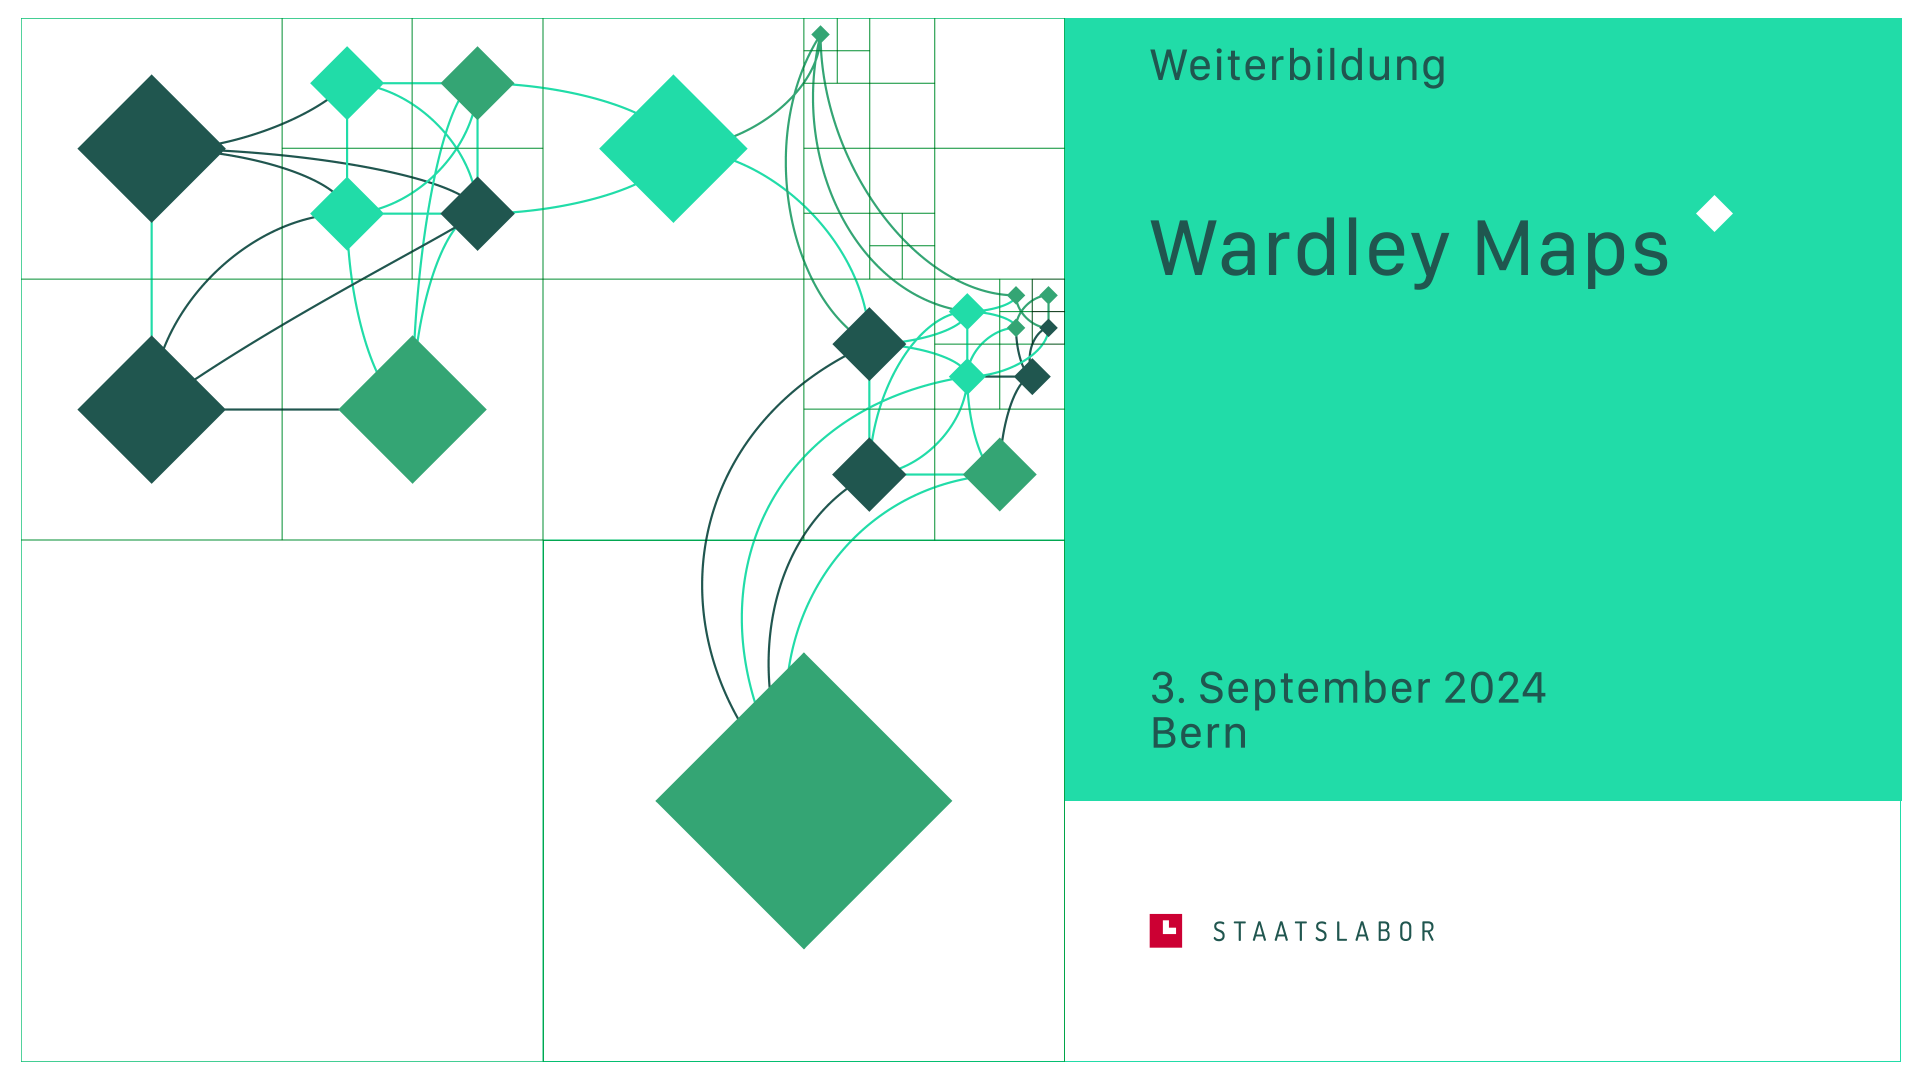 Wardley Maps